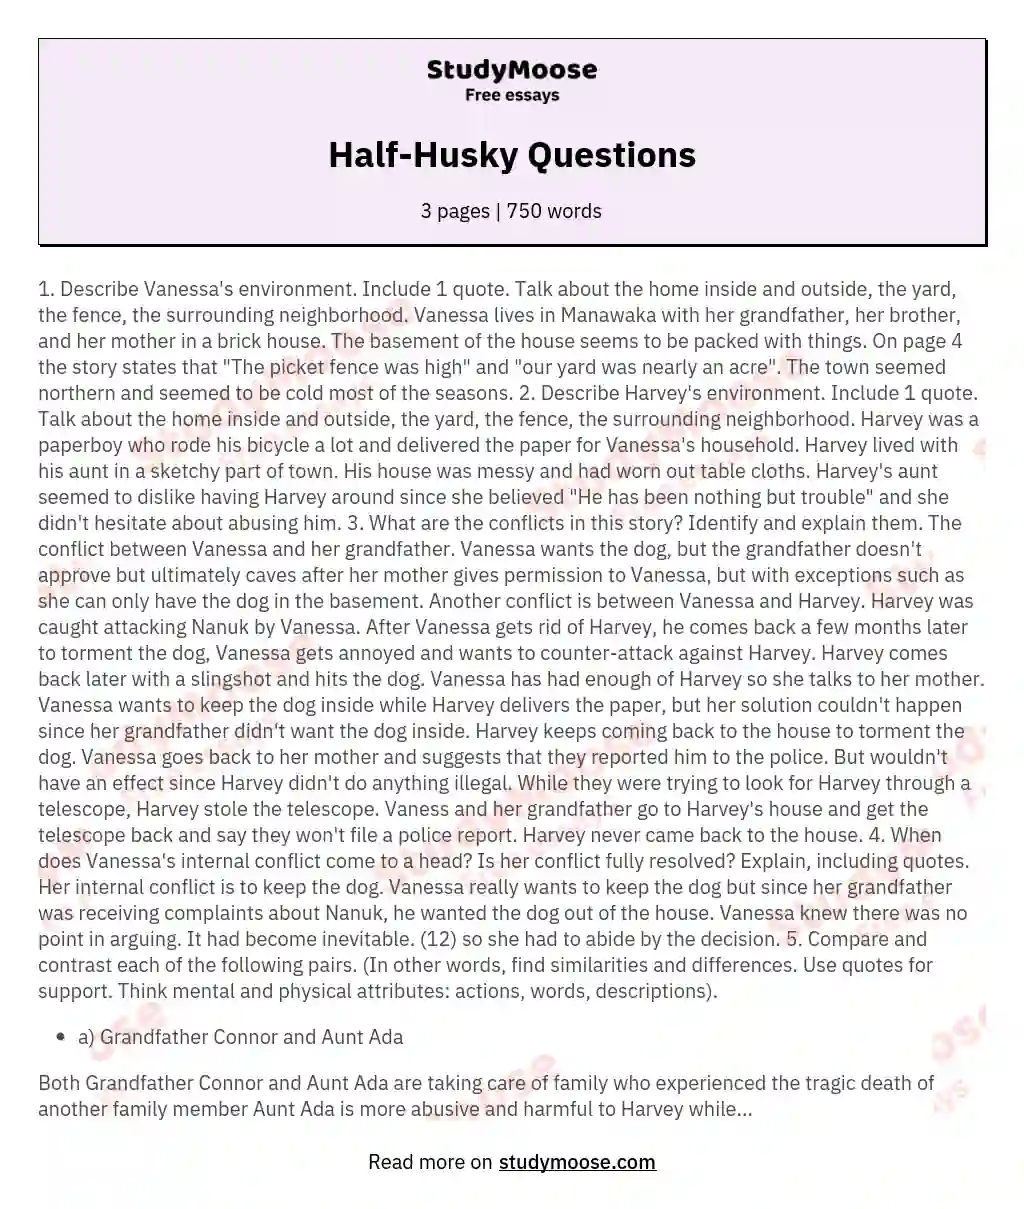 Half-Husky Questions essay